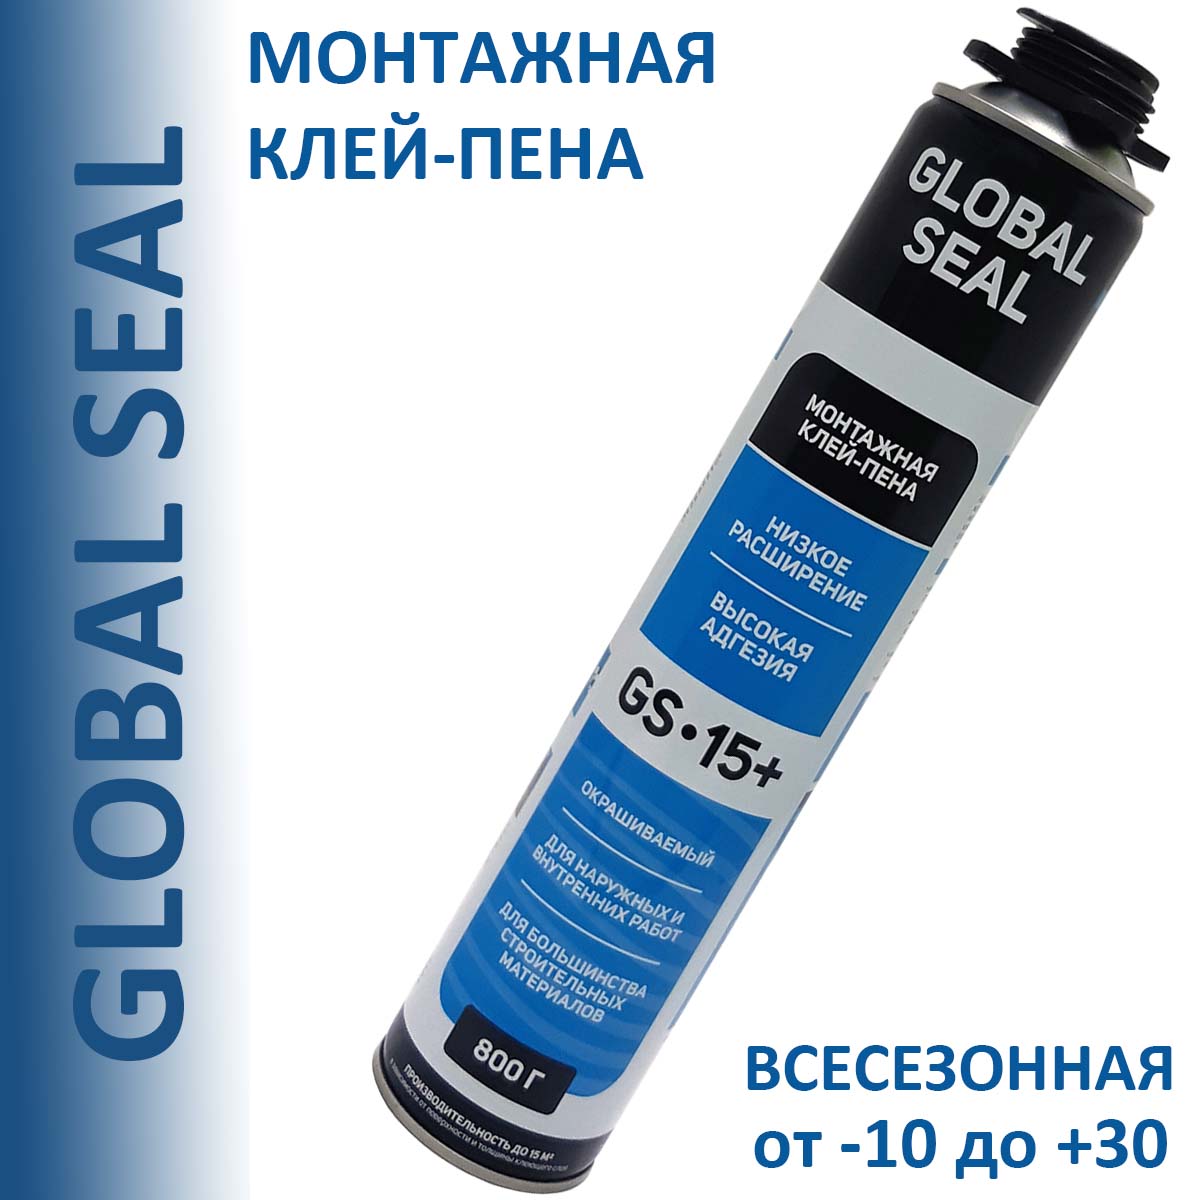 Клей-пена Монтажная Global Seal GS-15, всесезонная, 800 гр. всесезонная клей пена zigger